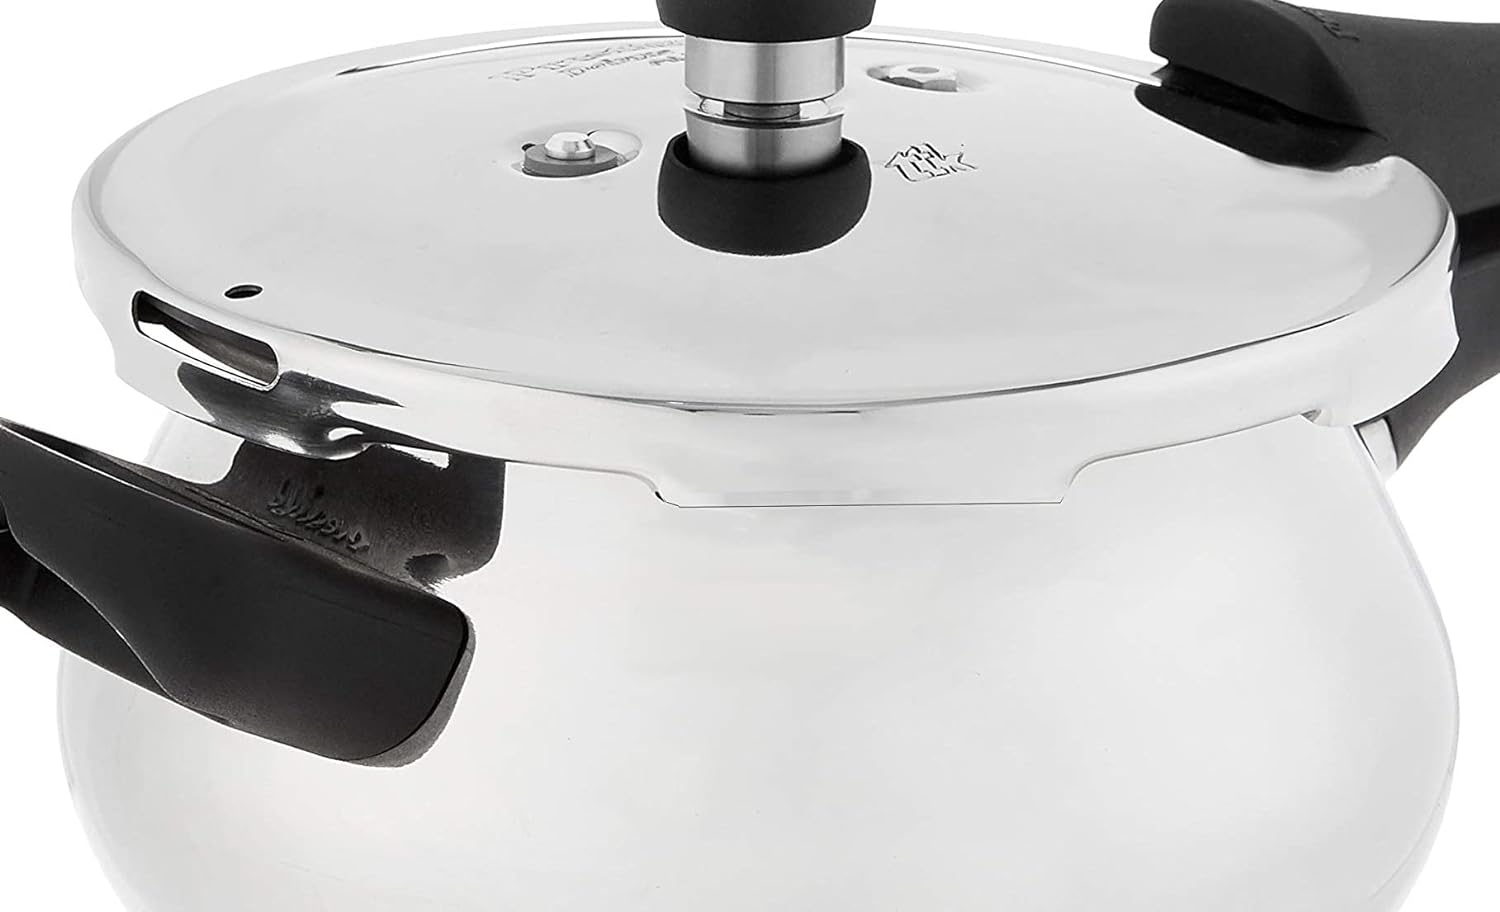 Prestige Deluxe Stainless Steel Mini Handi Pressure Cooker, 3.3-Liter